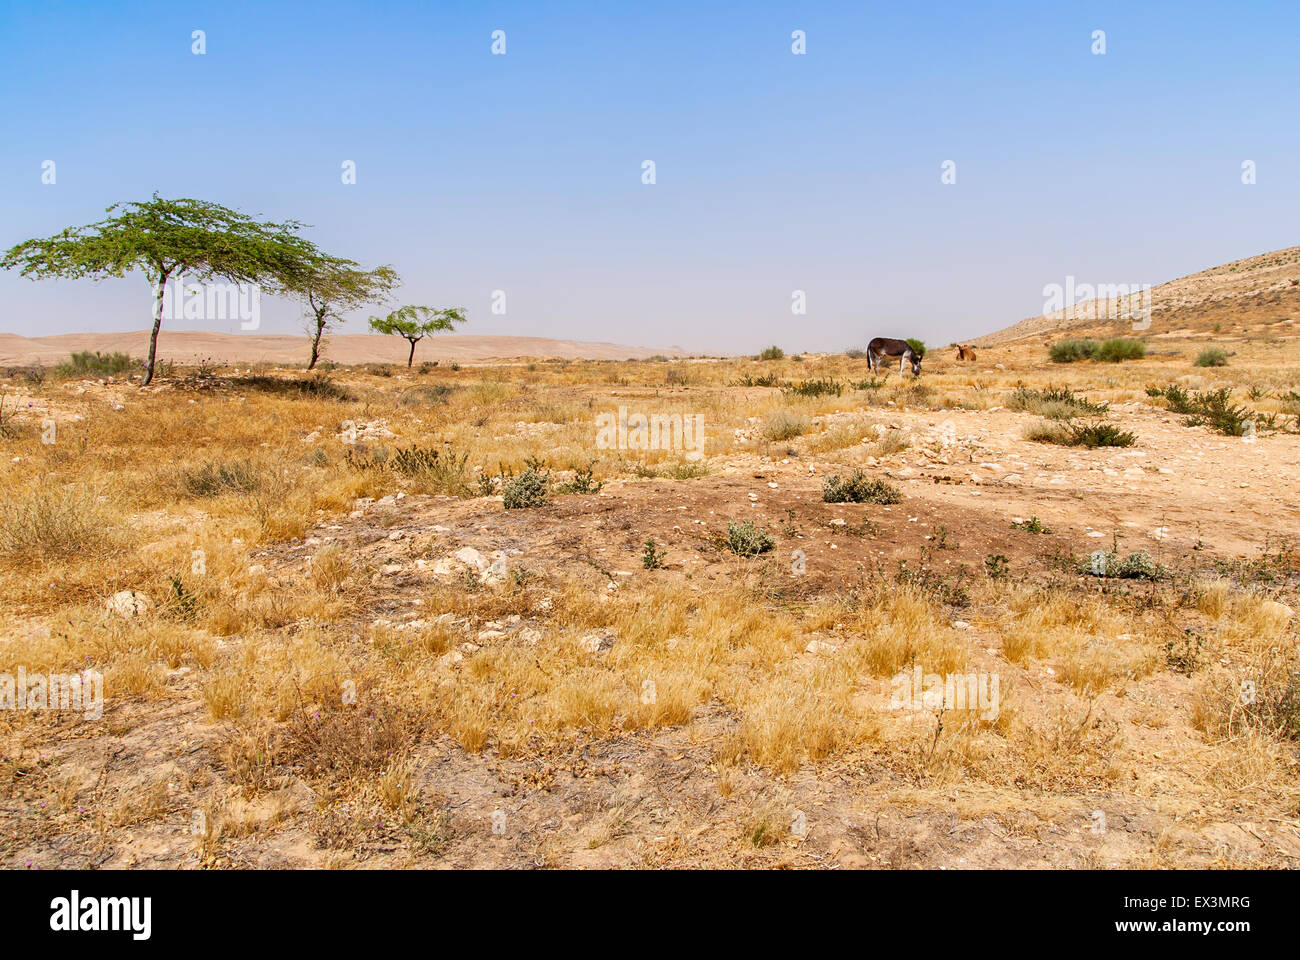 Desert landscape in Israel's Negev desert, donkey and camel in the background Stock Photo